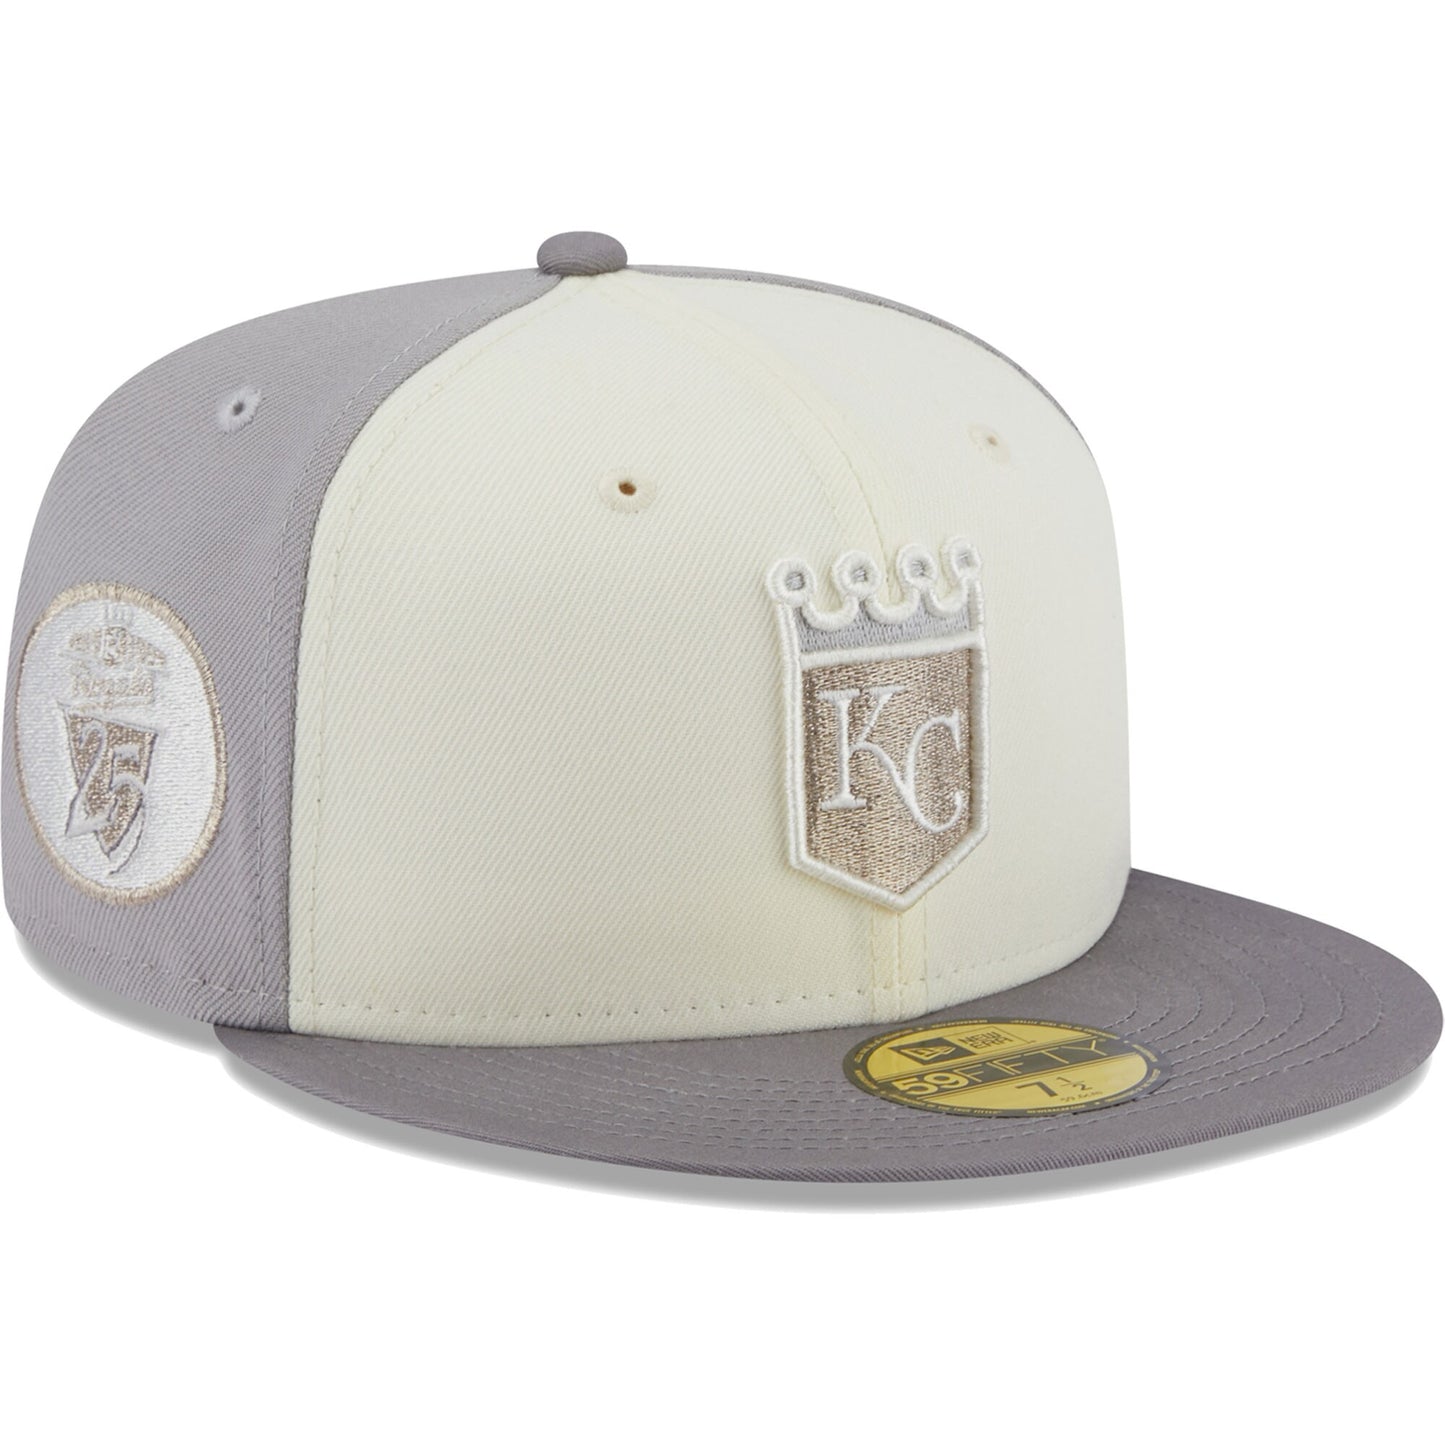 Kansas City Royals New Era Chrome Anniversary 59FIFTY Fitted Hat - Cream/Gray